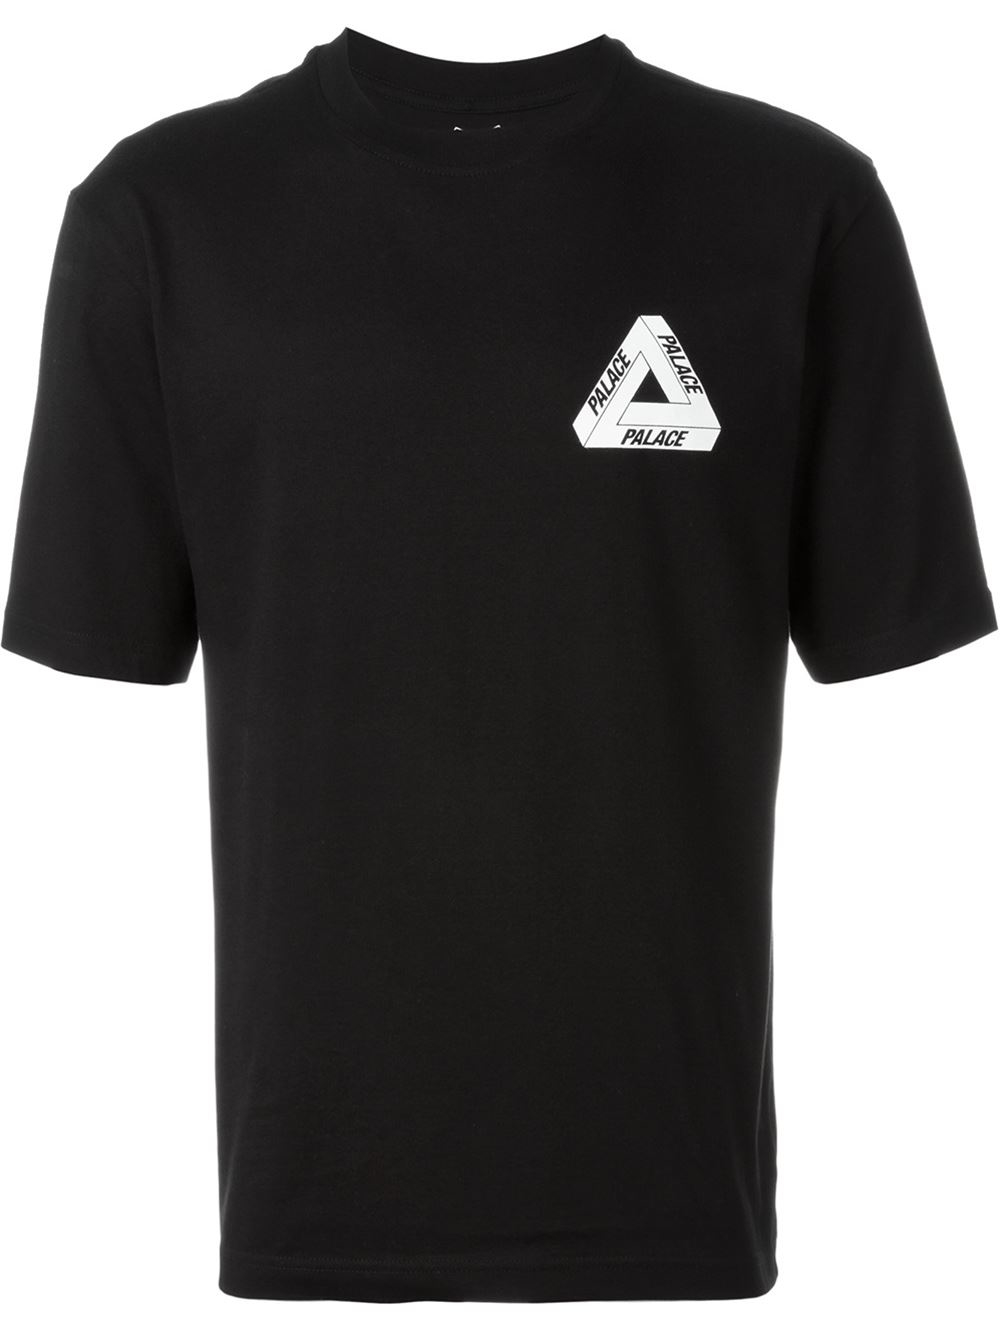 Palace Back Logo Print T-shirt in Black for Men - Lyst